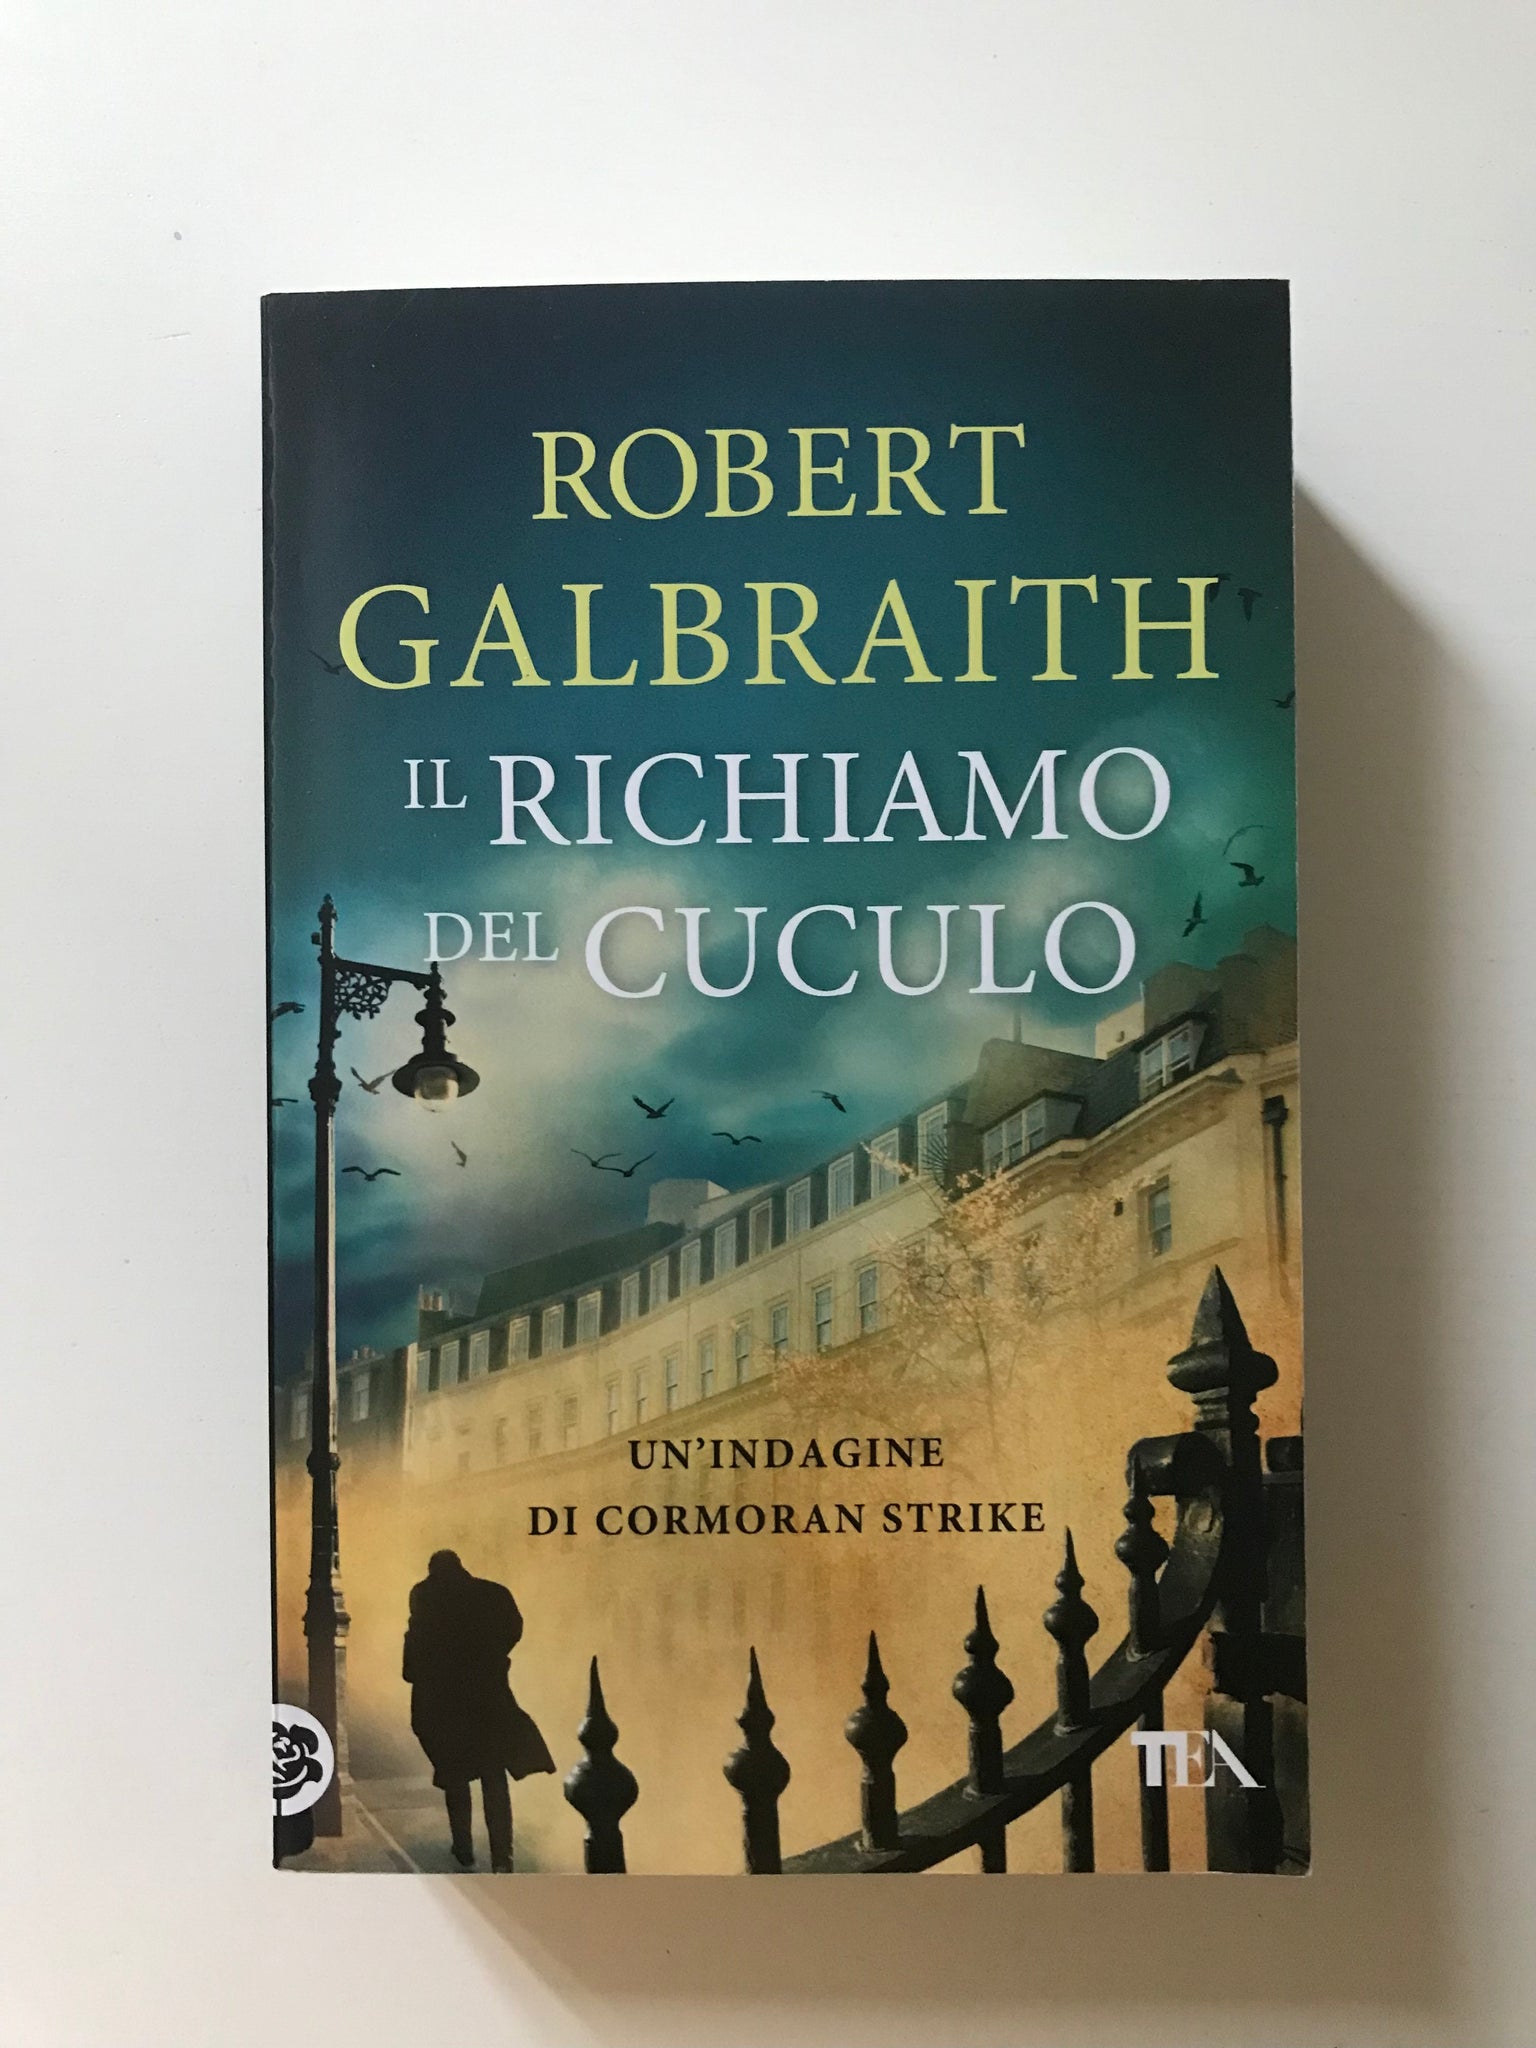 Robert Galbraith (J.K. Rowling ) - Il richiamo del cuculo